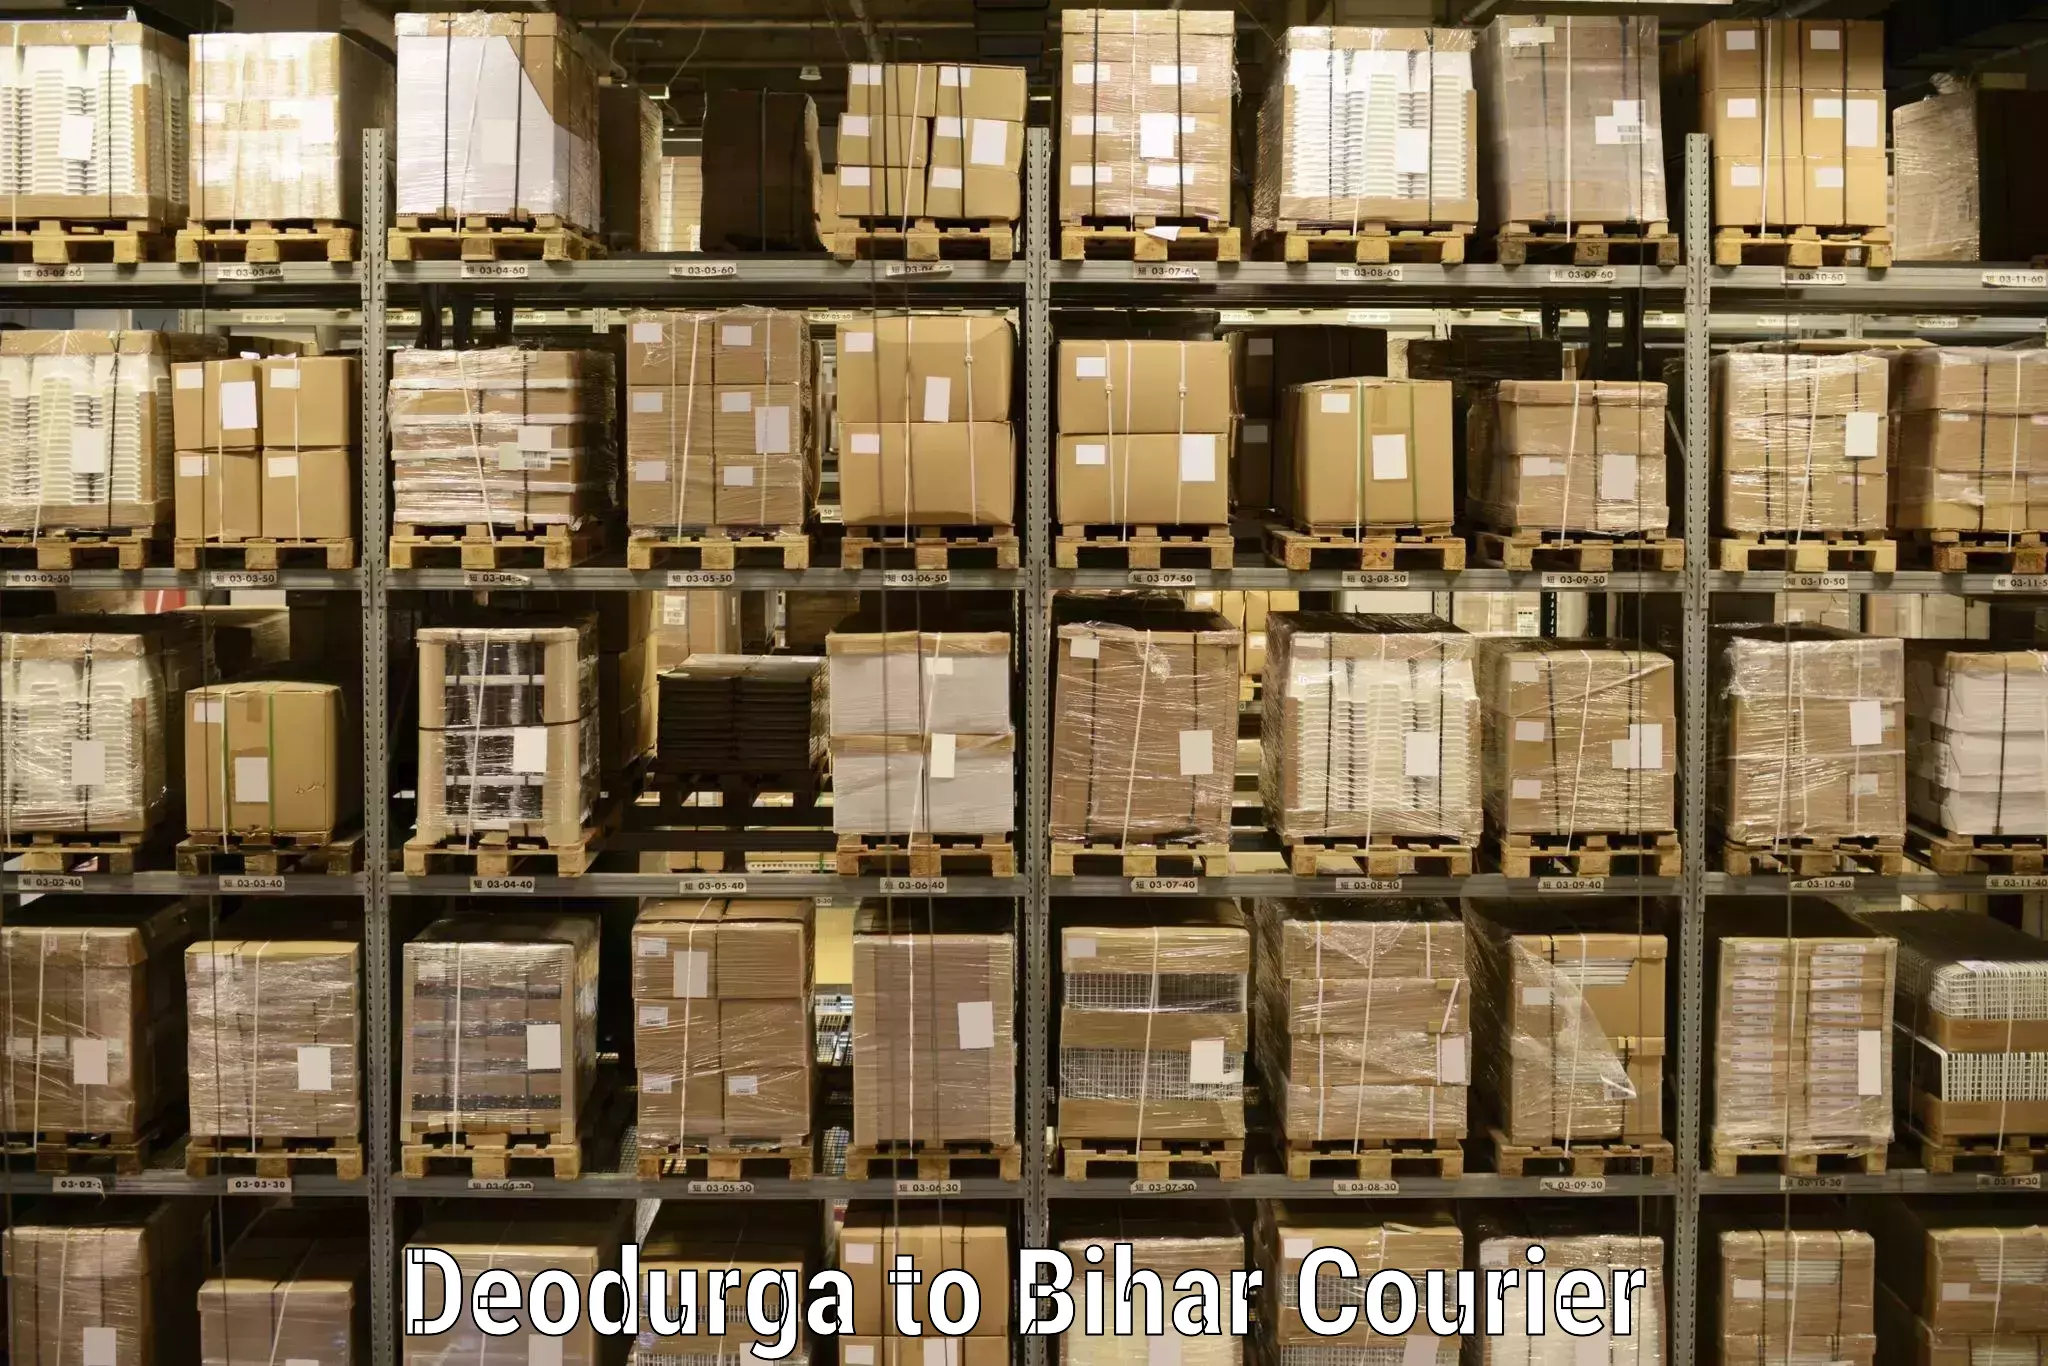 Cash on delivery service Deodurga to Bihar